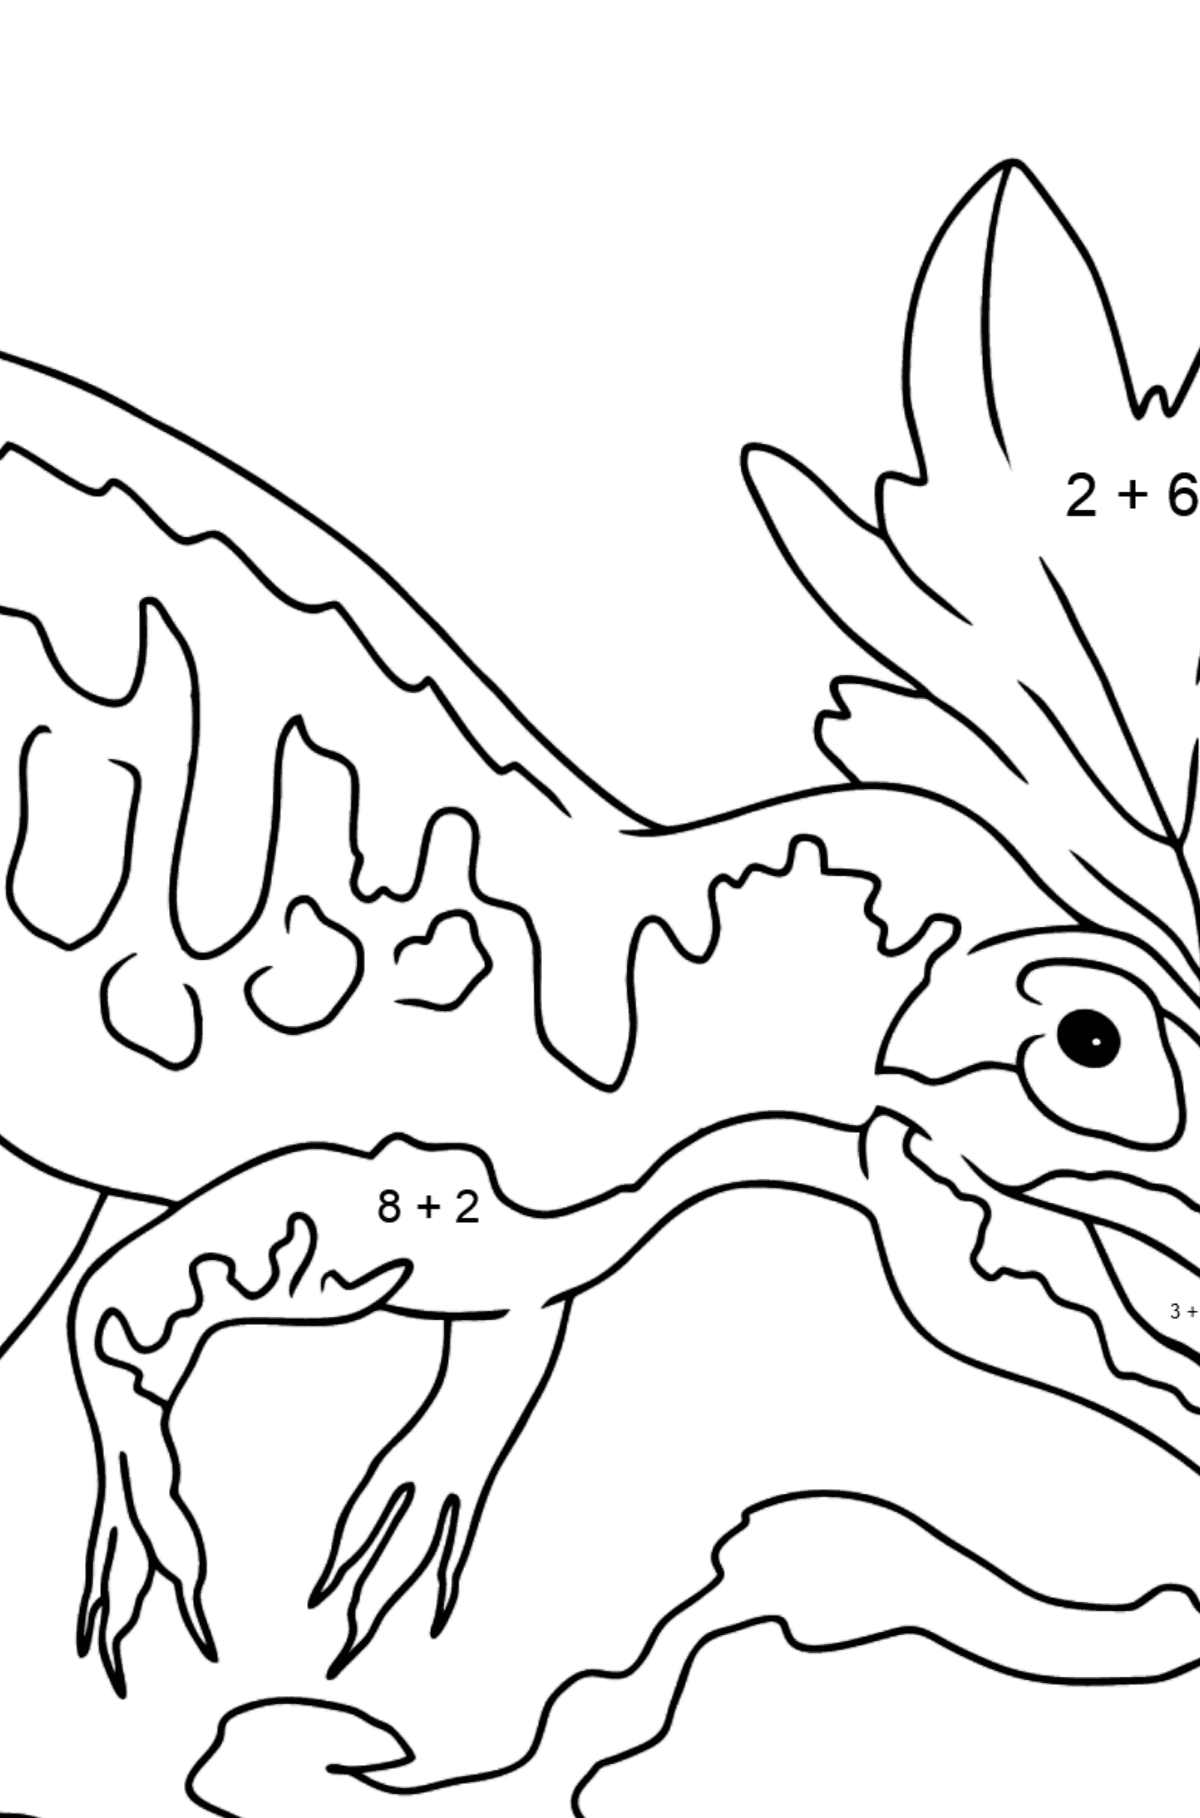 Dibujo para colorear de alosaurio (fácil) - Colorear con Matemáticas - Sumas para Niños